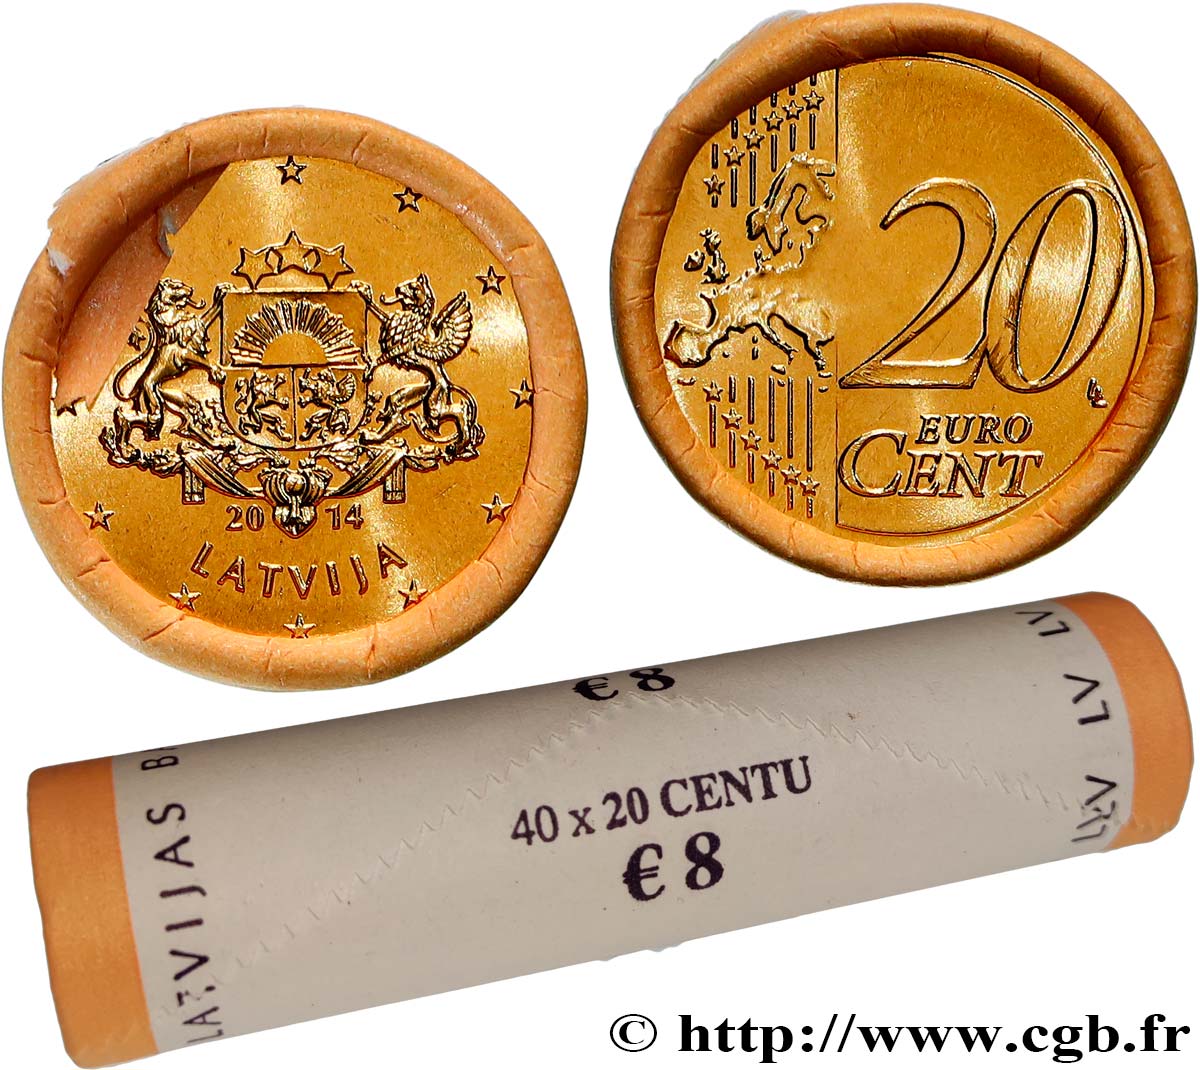 LATVIA Rouleau 40 x 20 Cent Armoiries 2014 MS